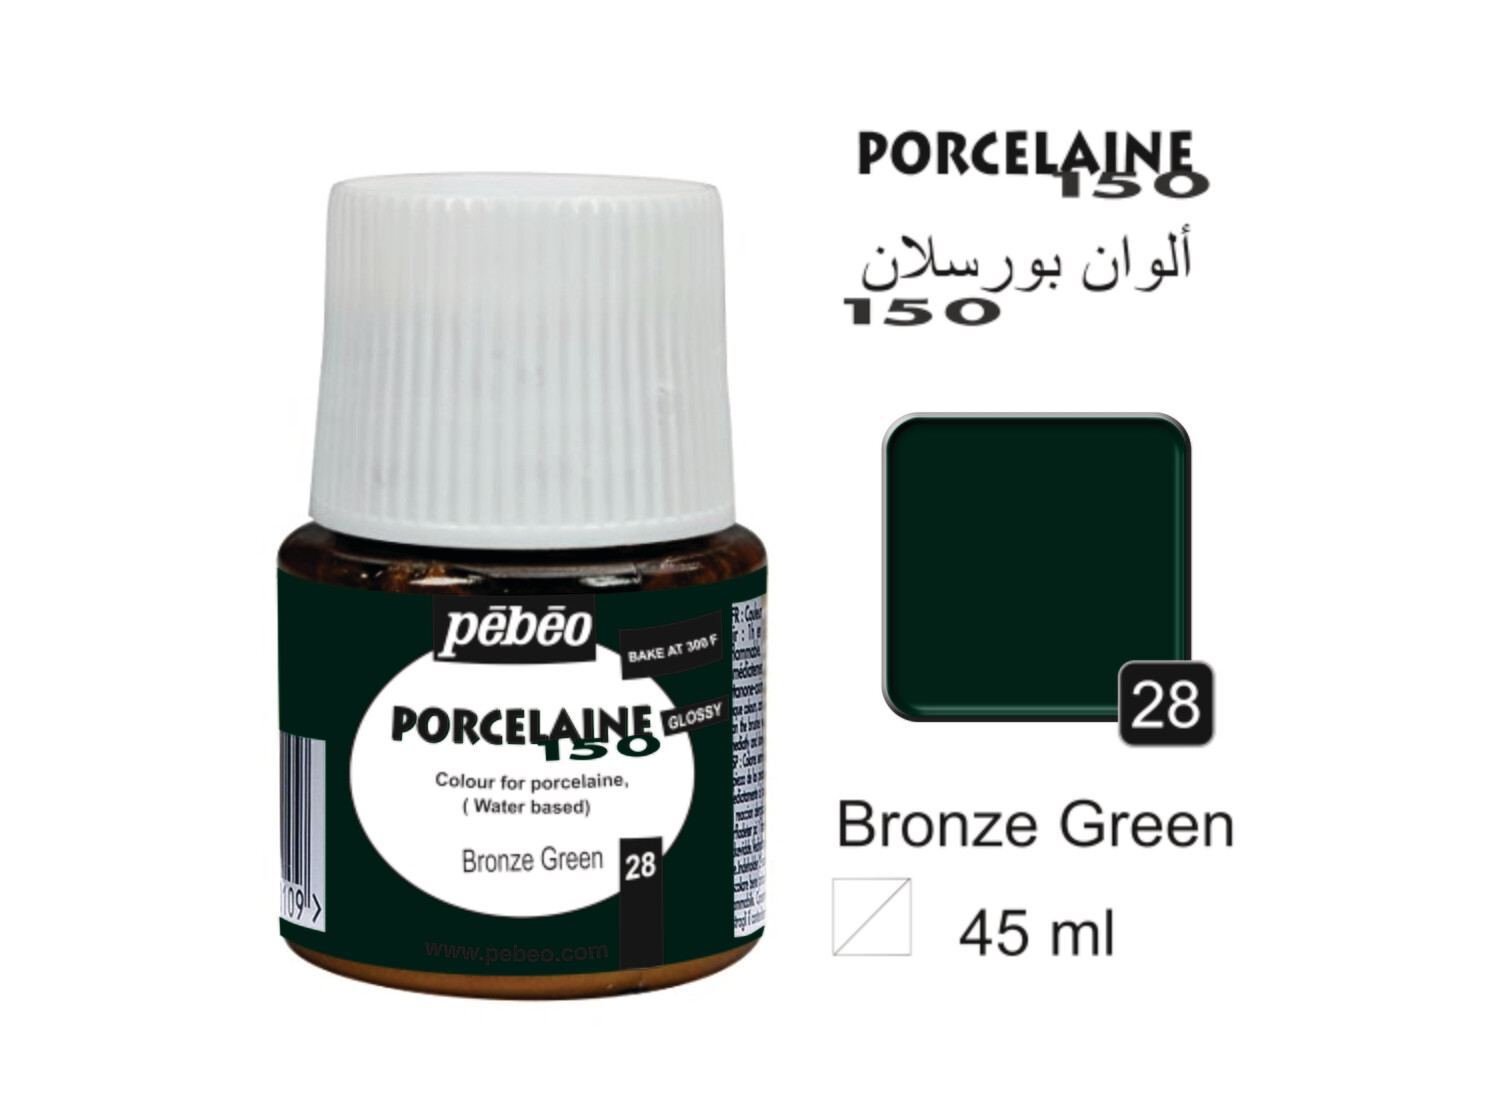 PORCELAINE 150, GLOSS 45 ml, Bronze green No. 28